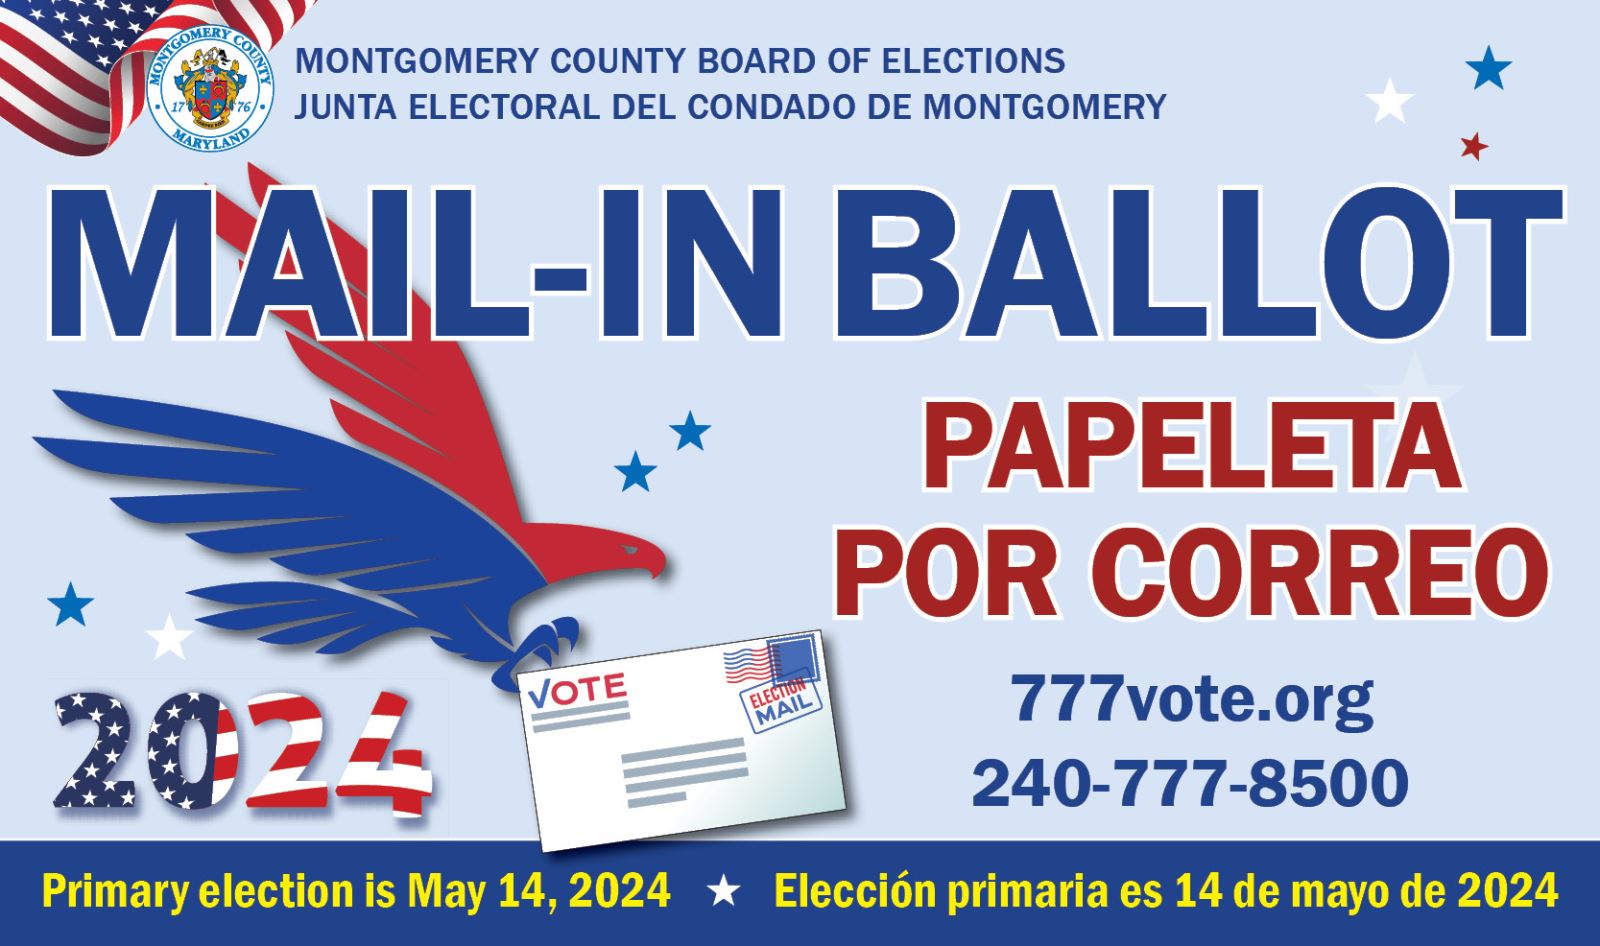 2022 Election - Recommended 14 Early Voting Centers - Se Recomiendan 14 Centros de Votacion Anticipada.